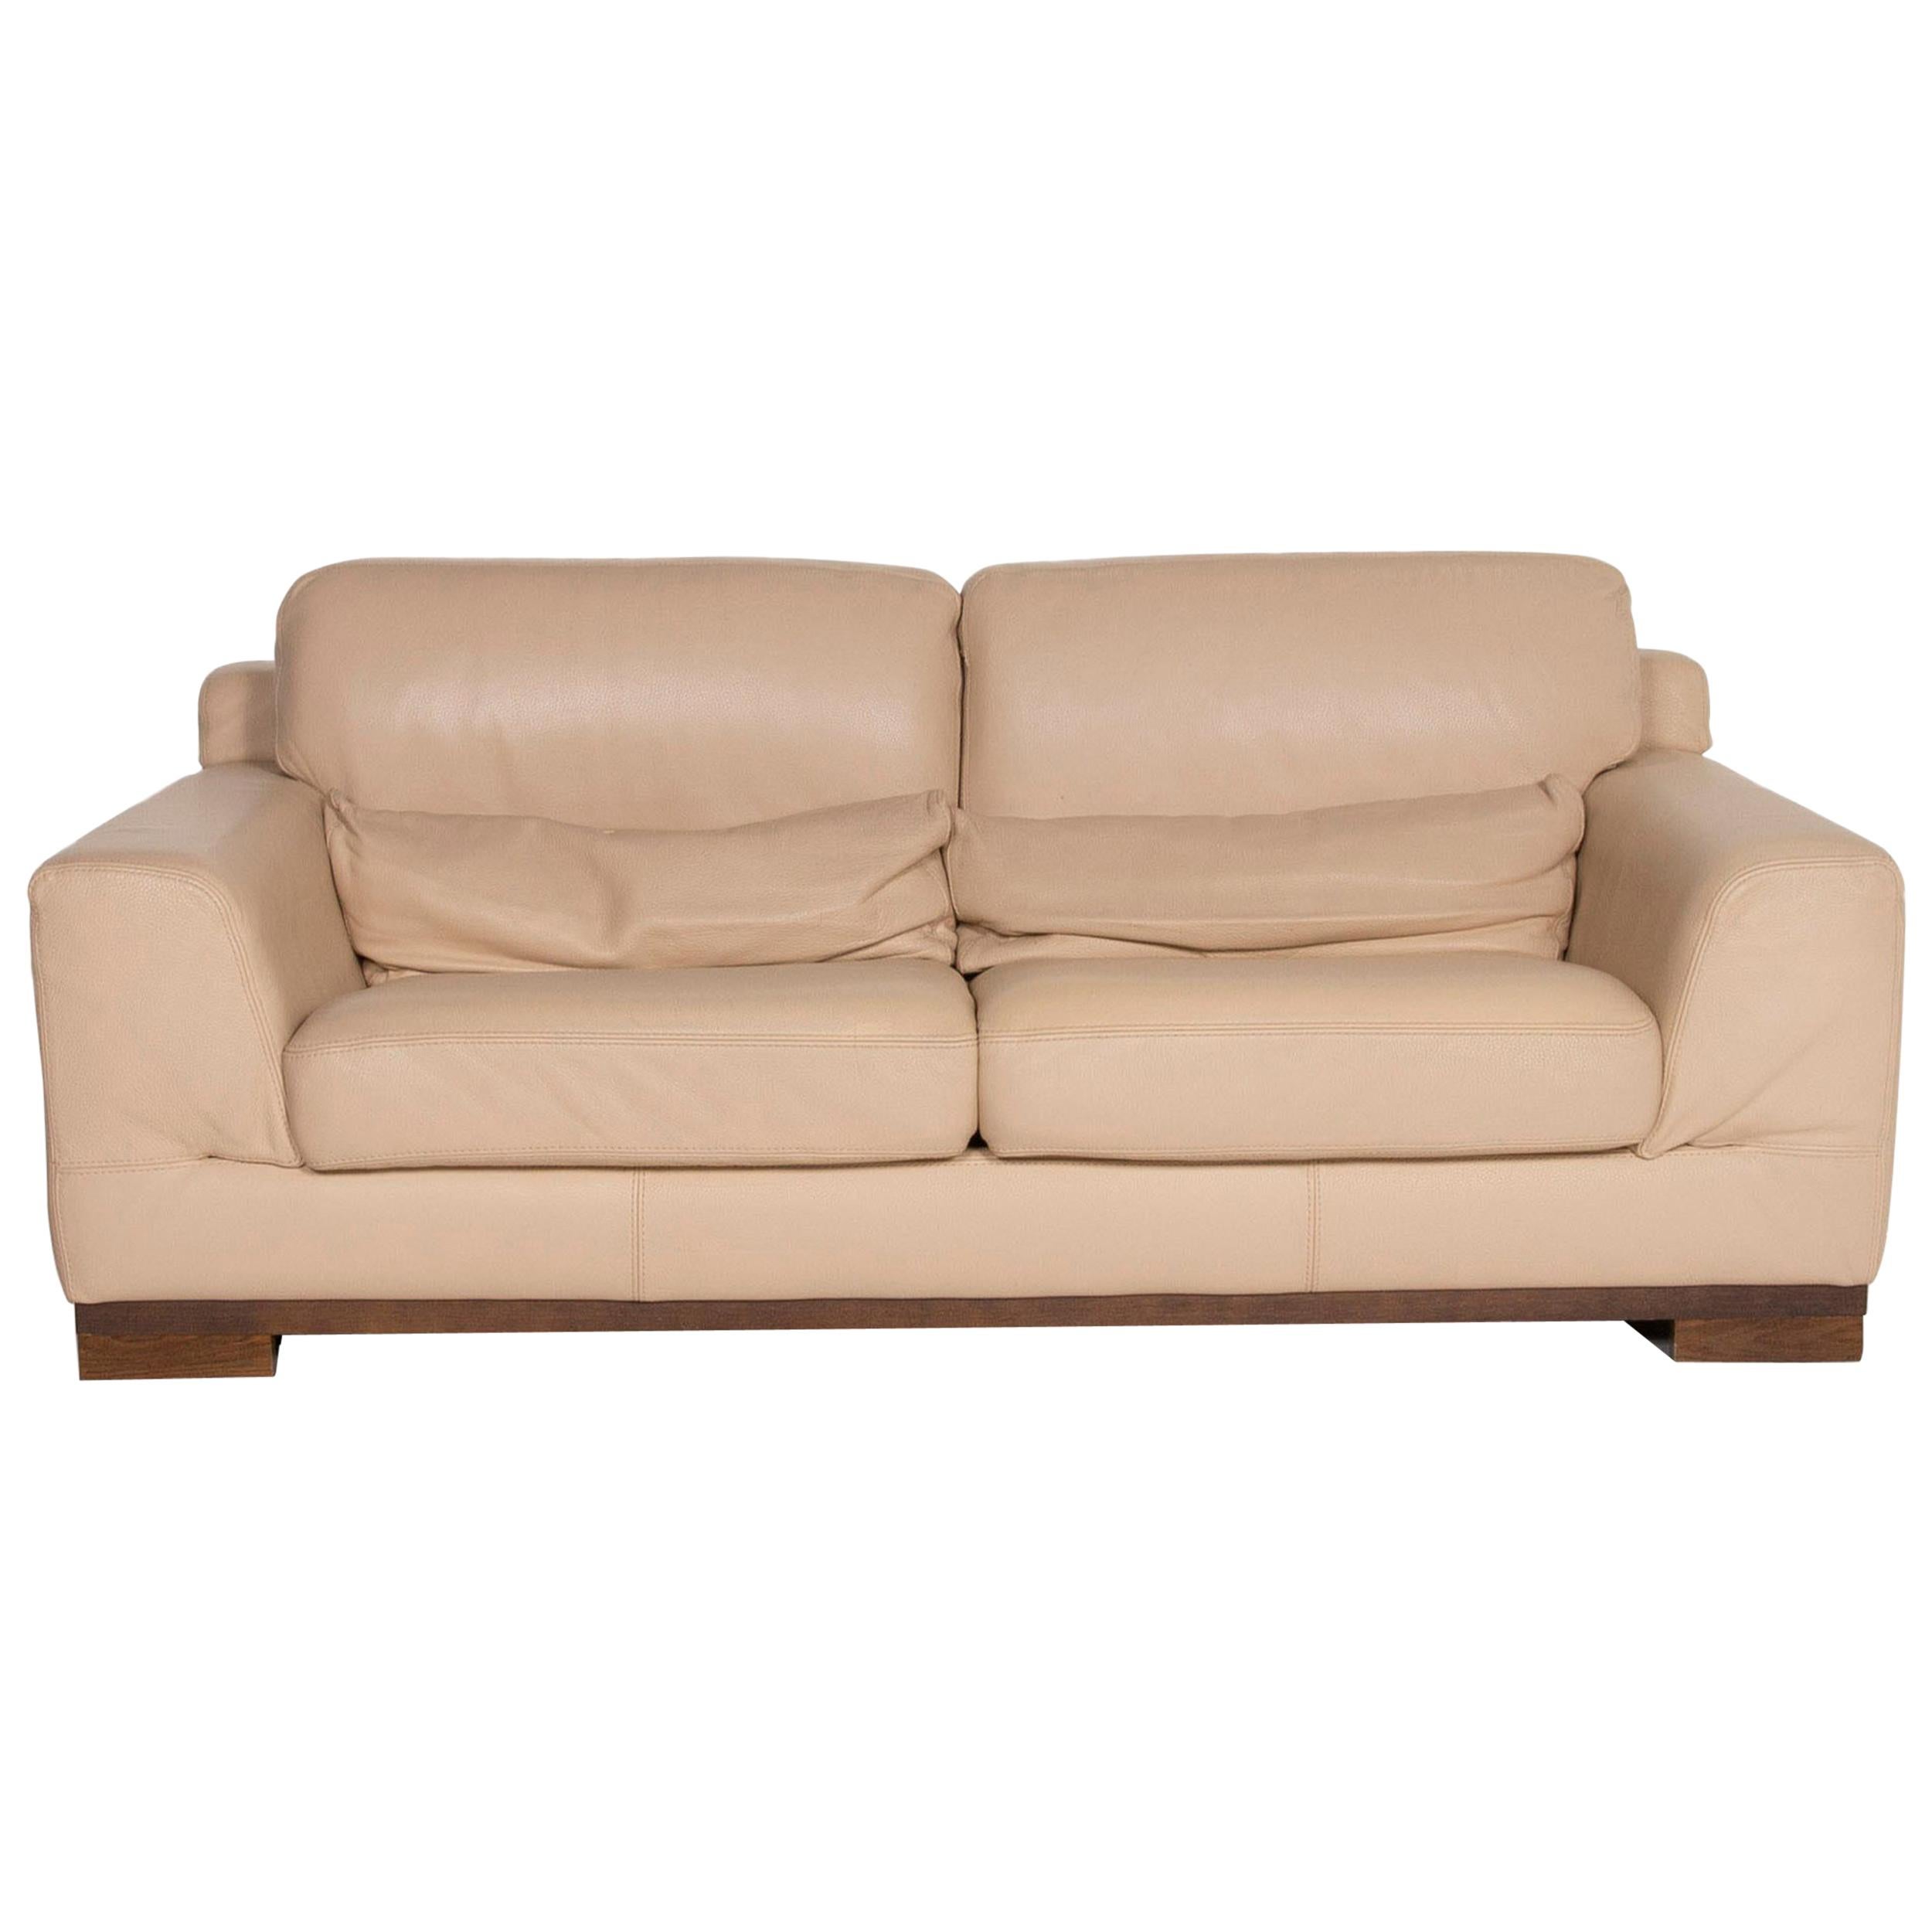 Natuzzi 2085 Leather Sofa Beige Two, Natuzzi Leather Couch